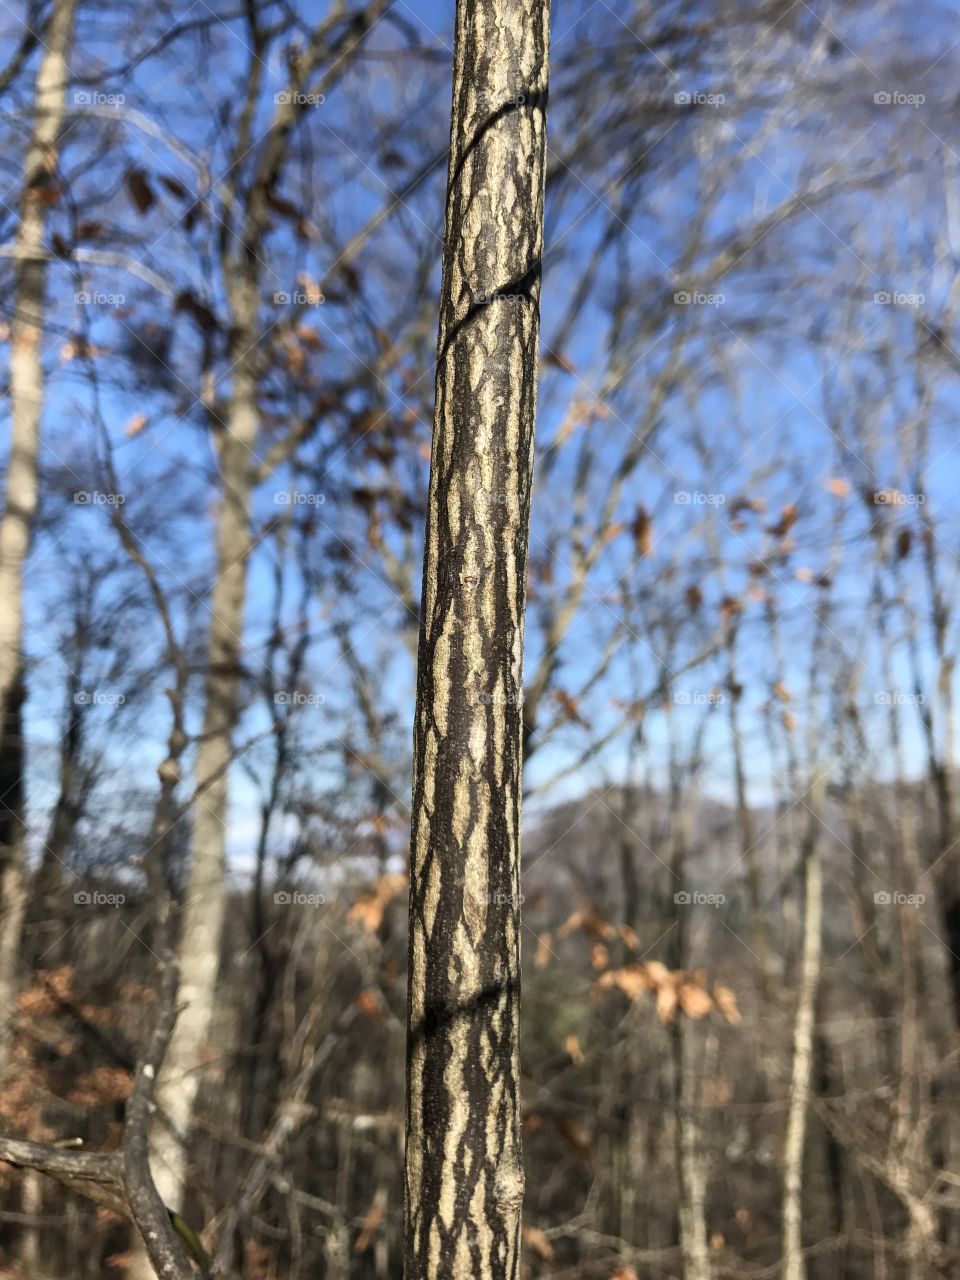 North Carolina wood 